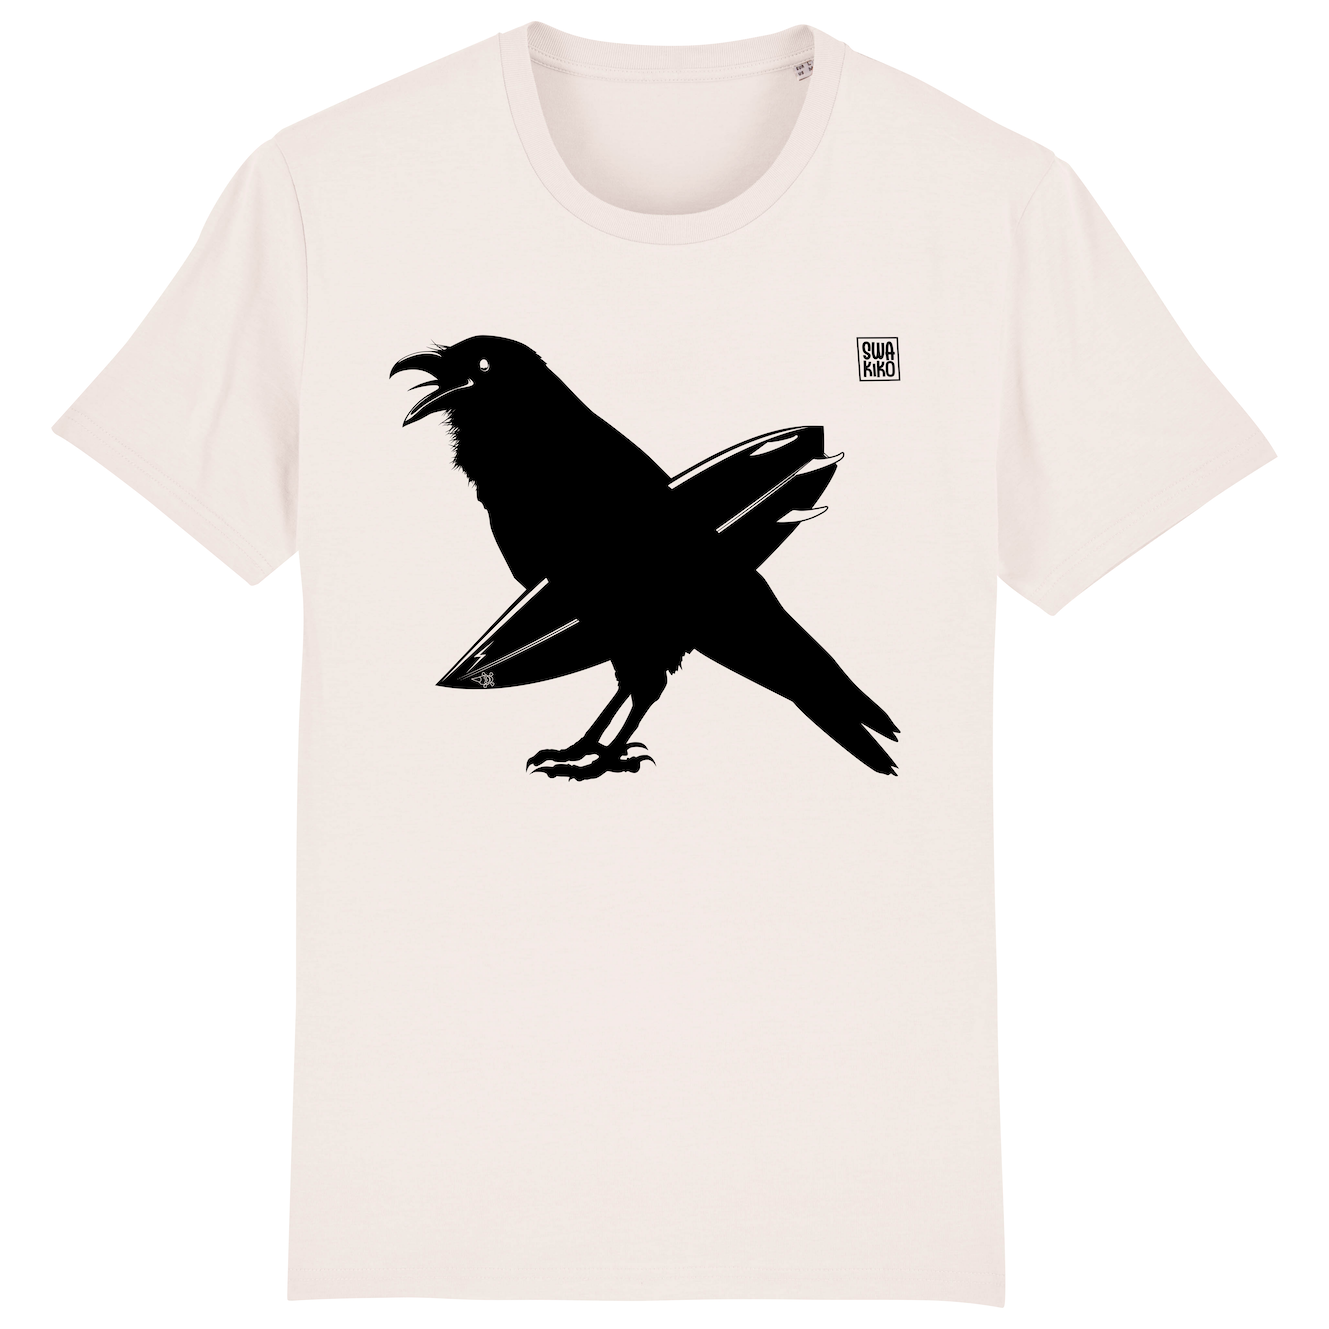 Surf t-shirt men white, The Snaking Crow